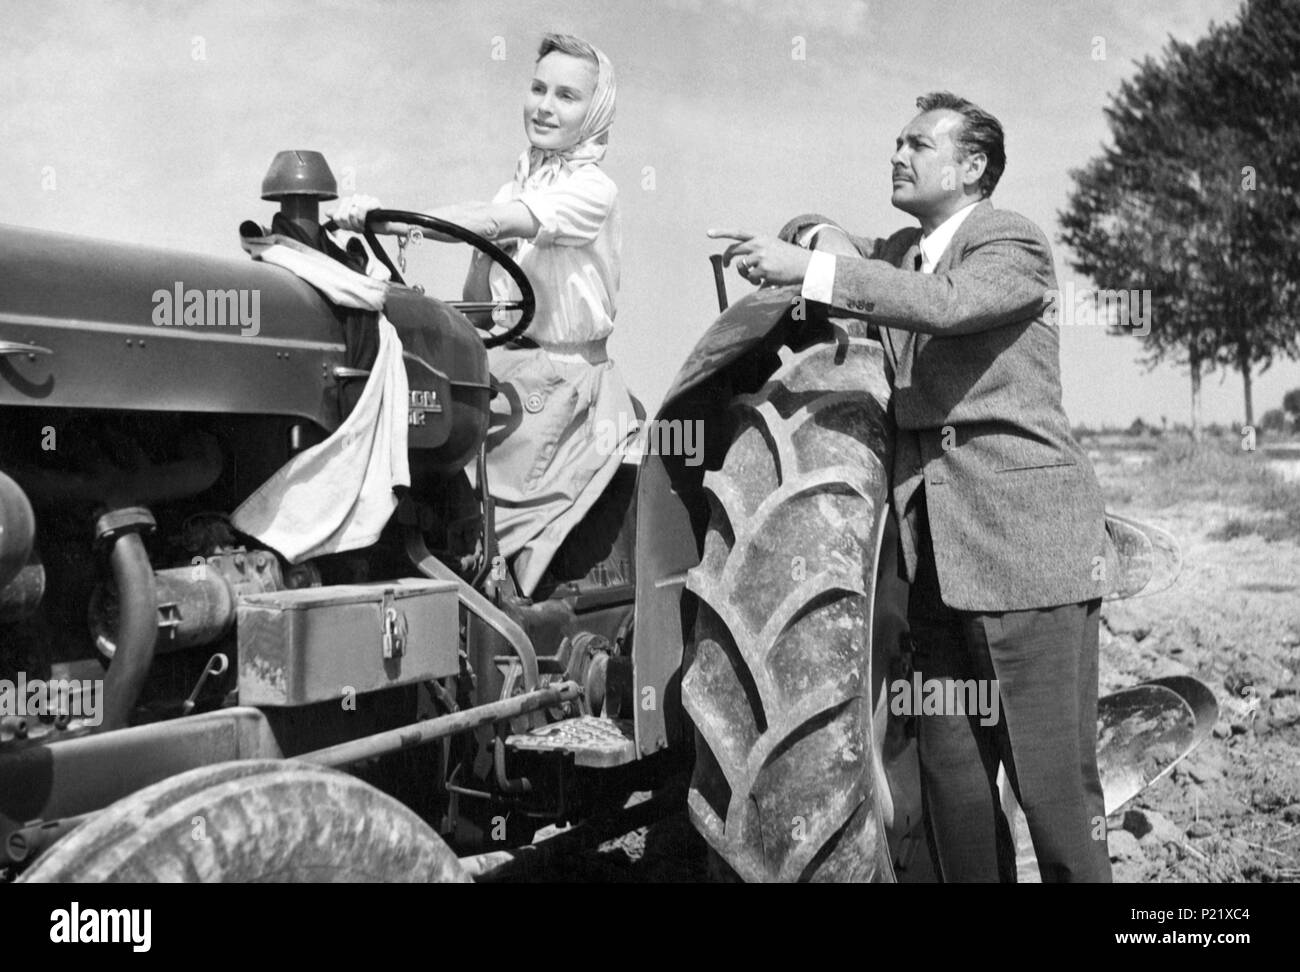 Original Film Titel: LA MURALLA. Englischer Titel: LA MURALLA. Regisseur: LUIS LUCIA. Jahr: 1958. Credit: S. C. BALCAZAR/Album Stockfoto